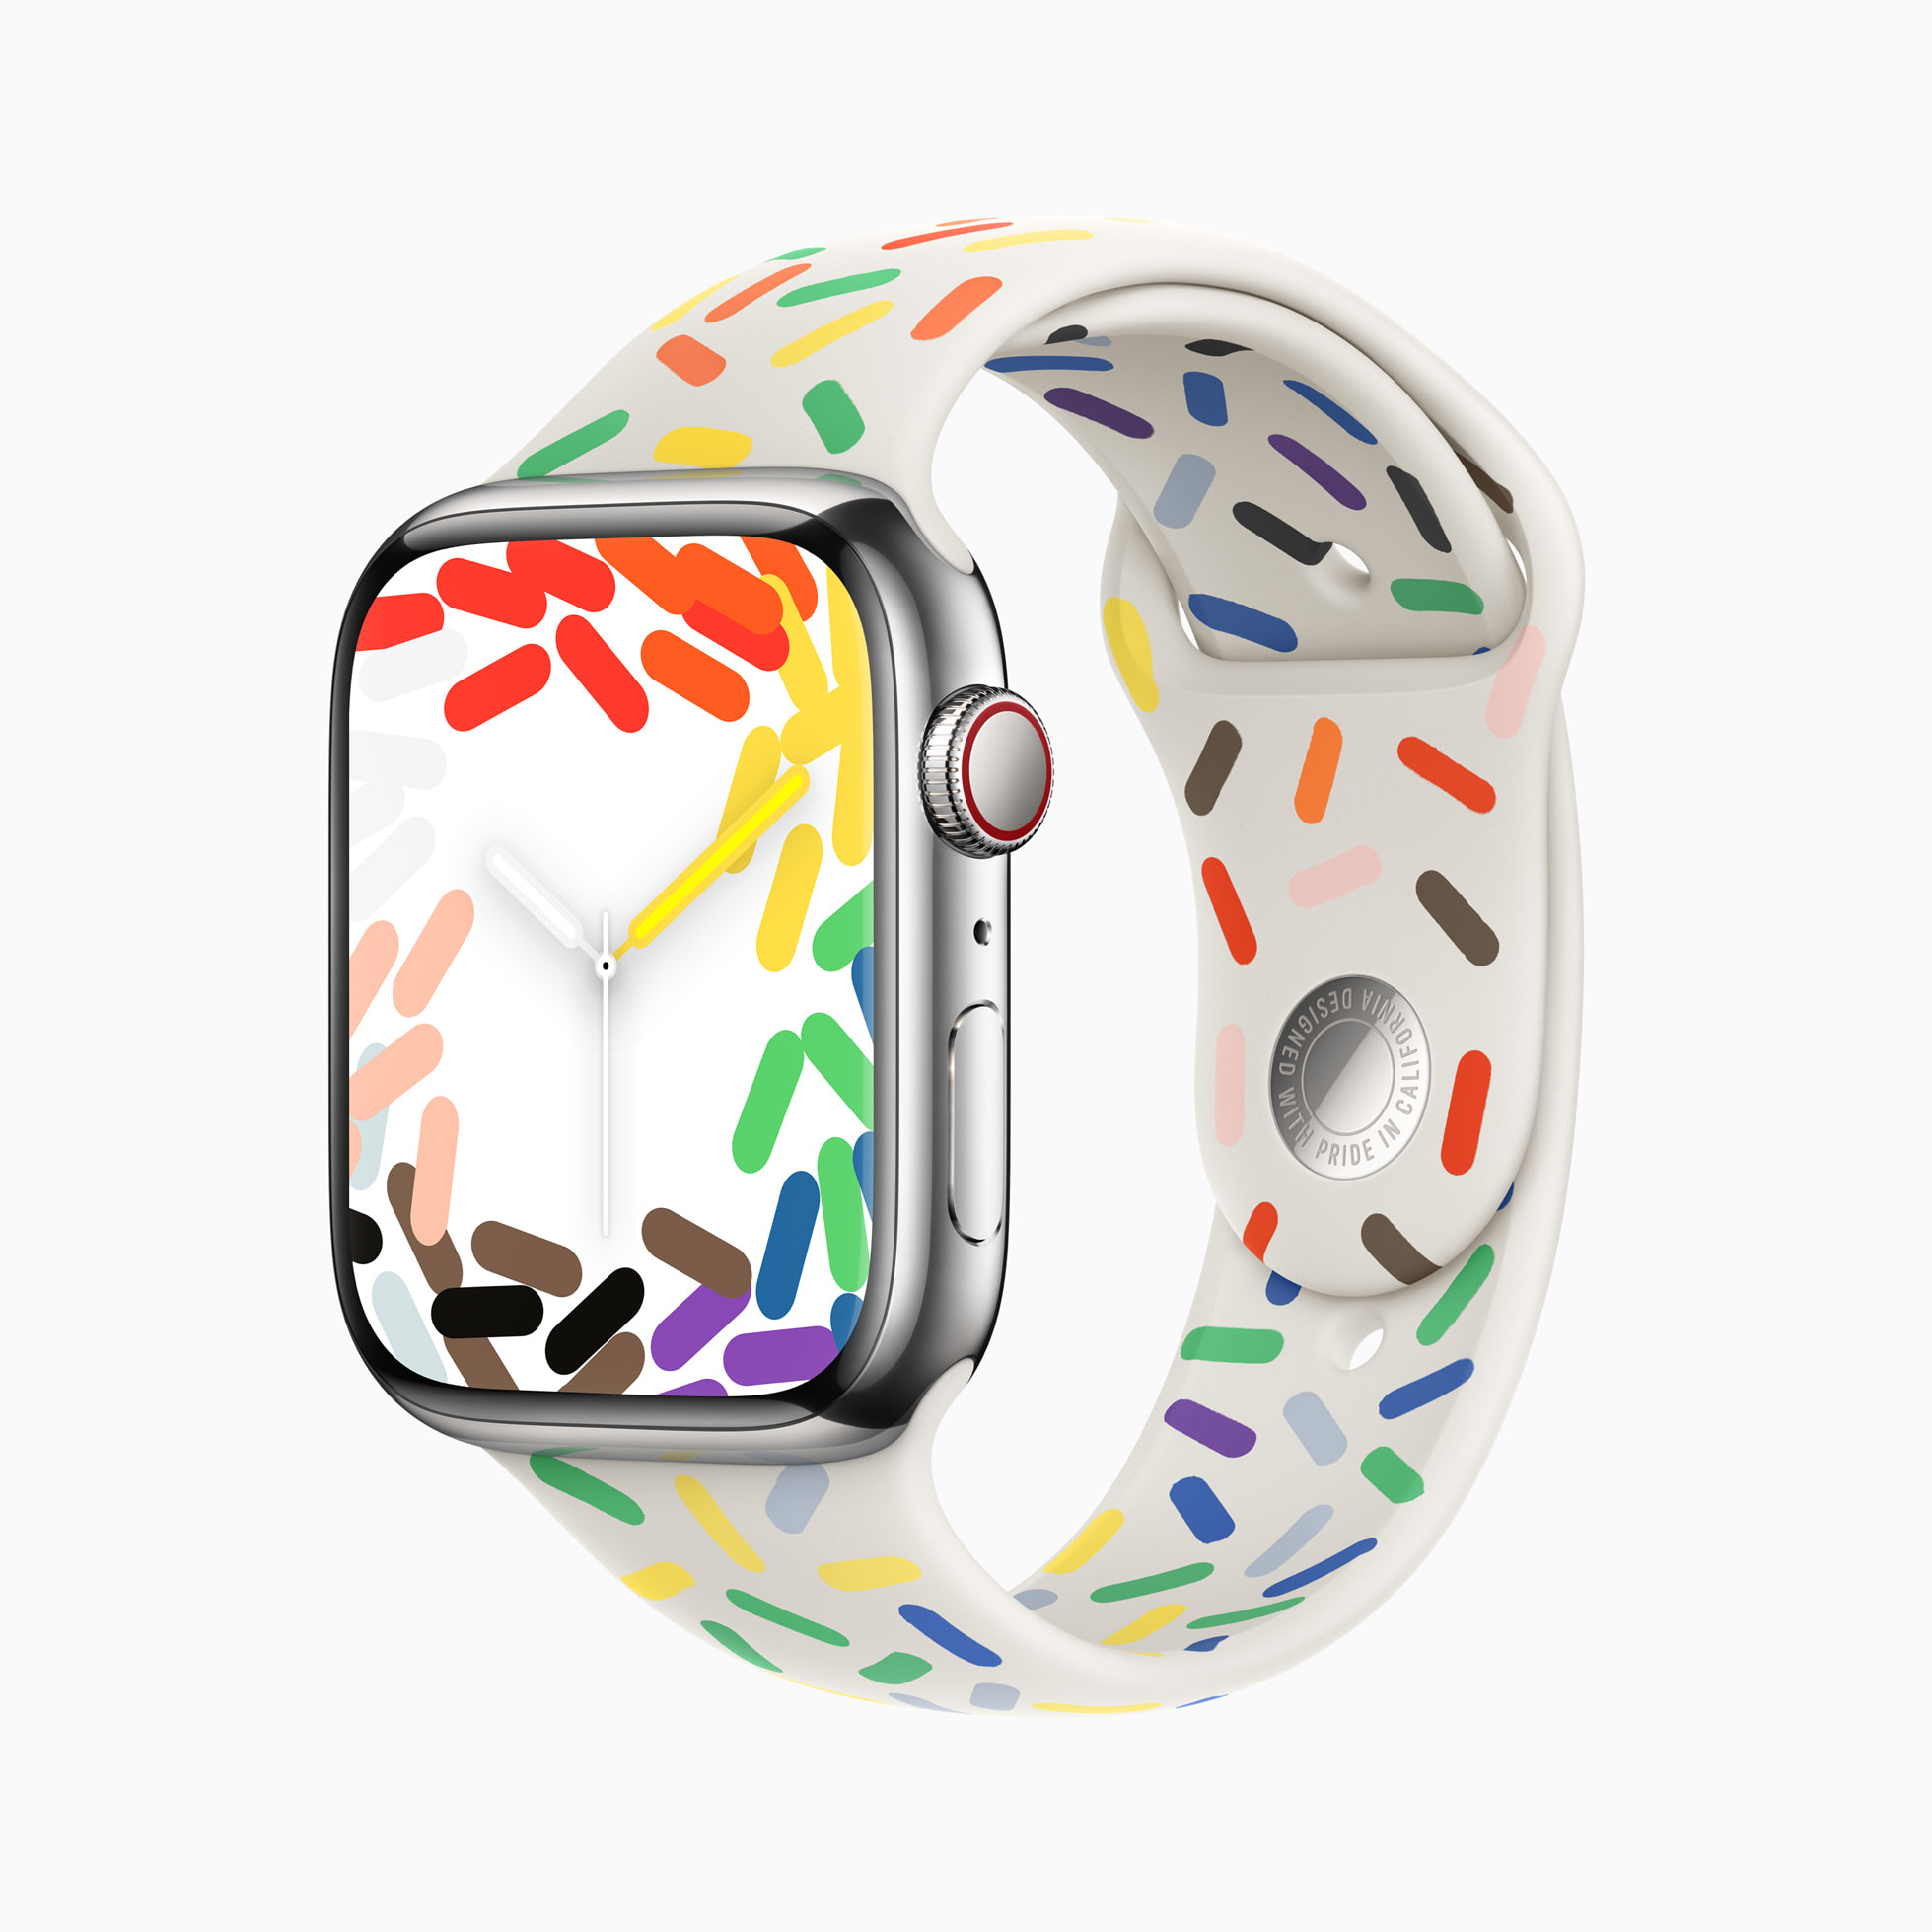 Apple Watch Pride Edition celebrates the LGBTQ+ community